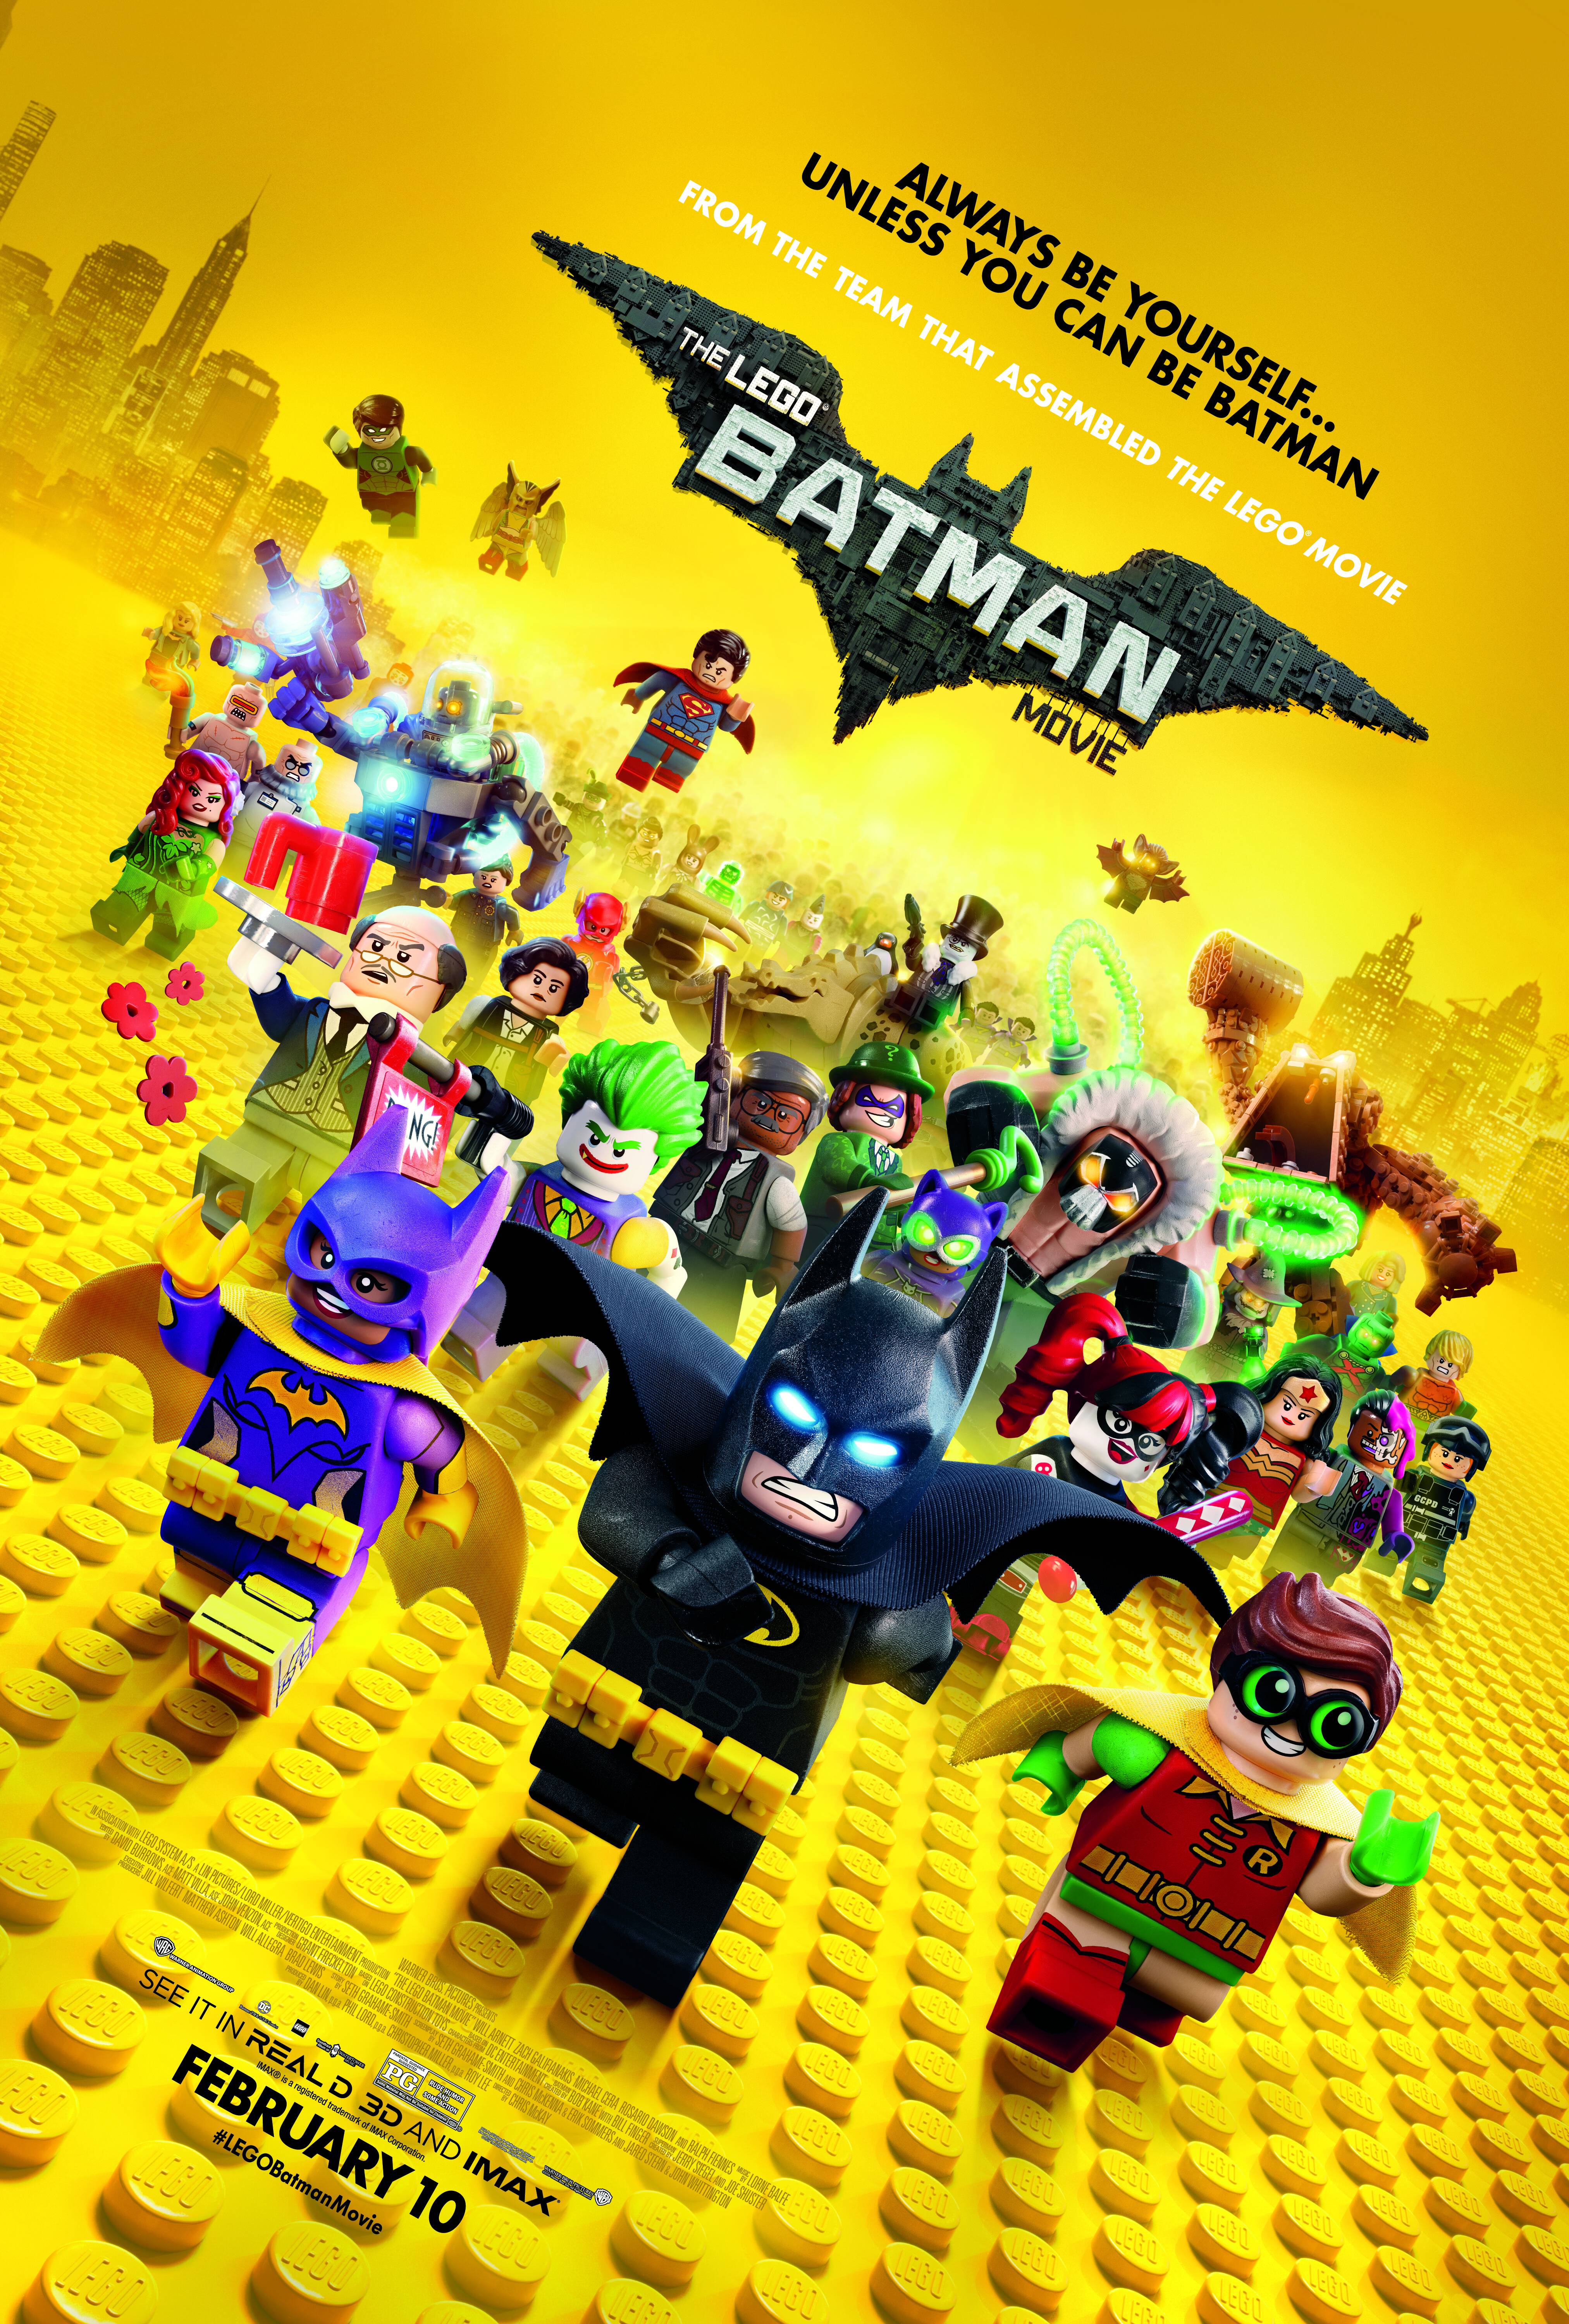 The LEGO Batman movie hits theaters February 10, 2017. The kids will love the new LEGO Batman Movie App that allows them to be LEGO Batman!